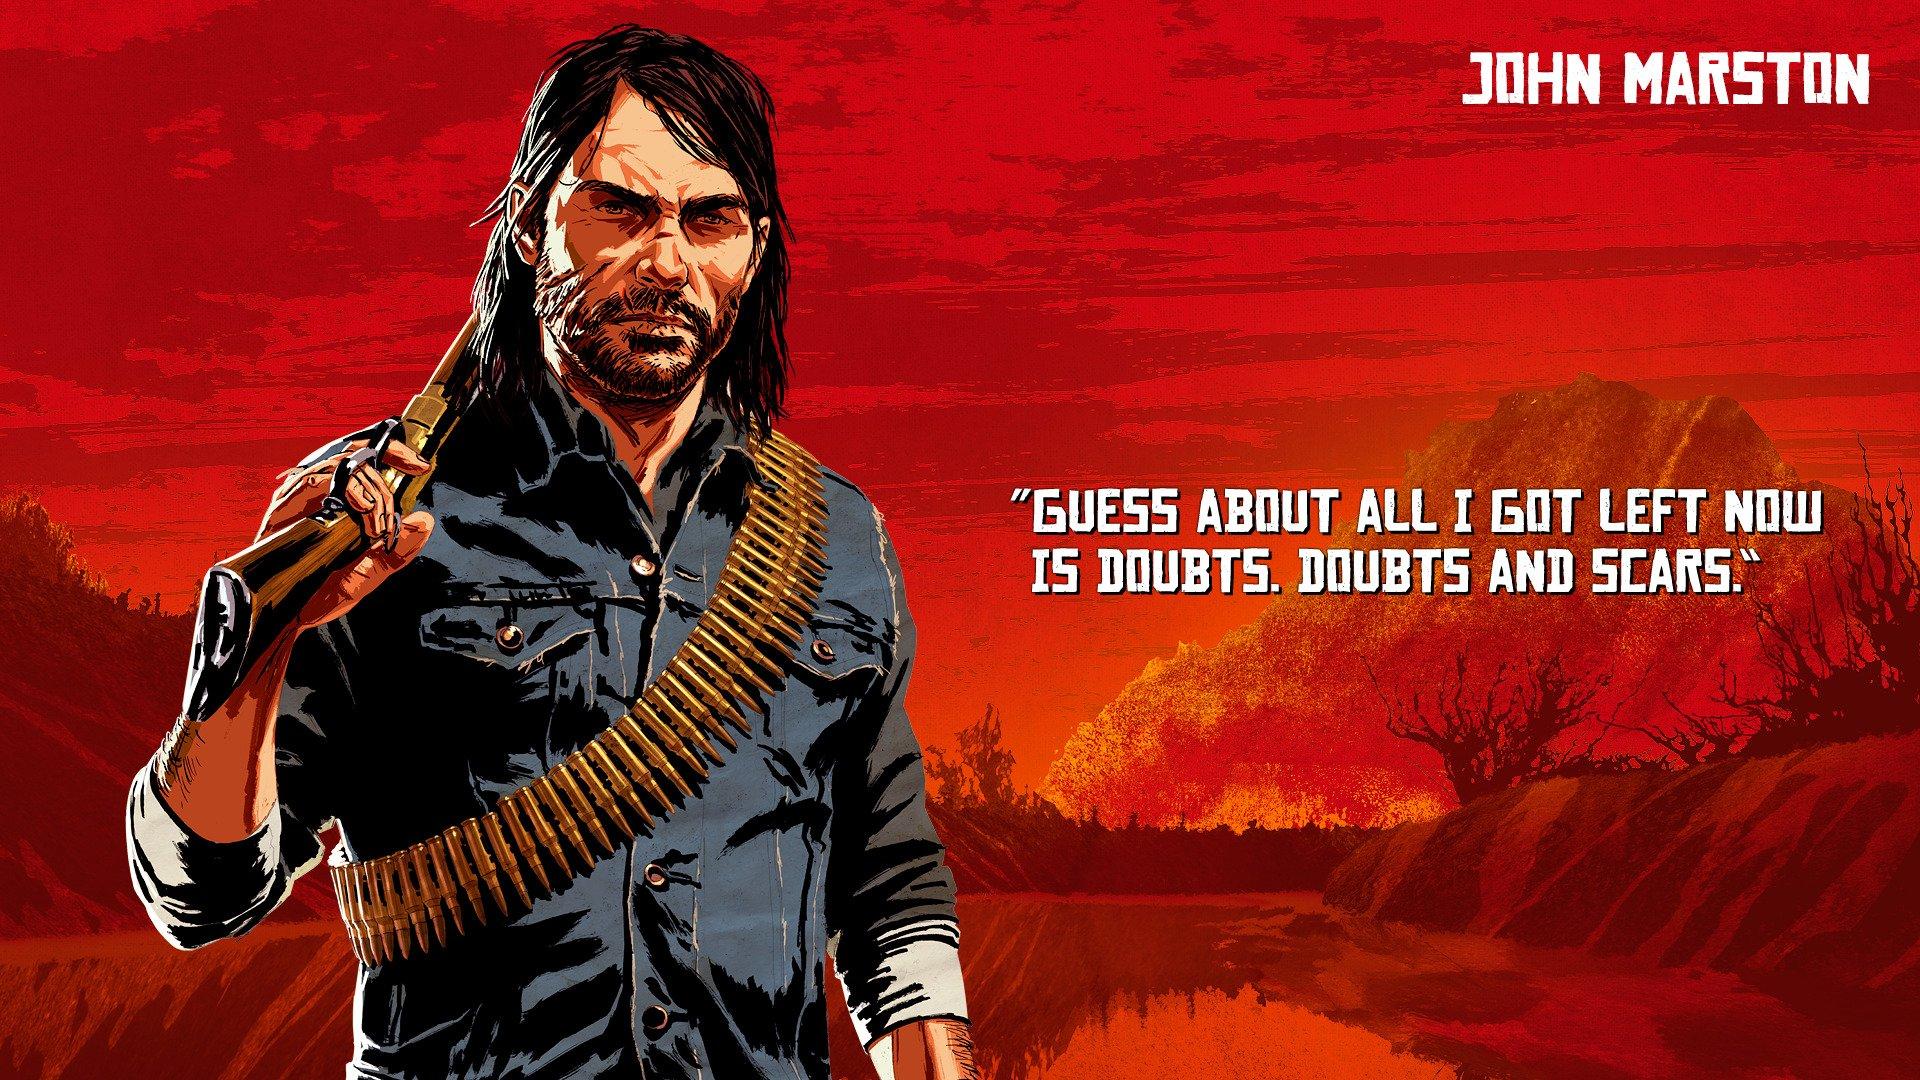 Red Dead Redemption 2 Receives New Digital Art Focusing